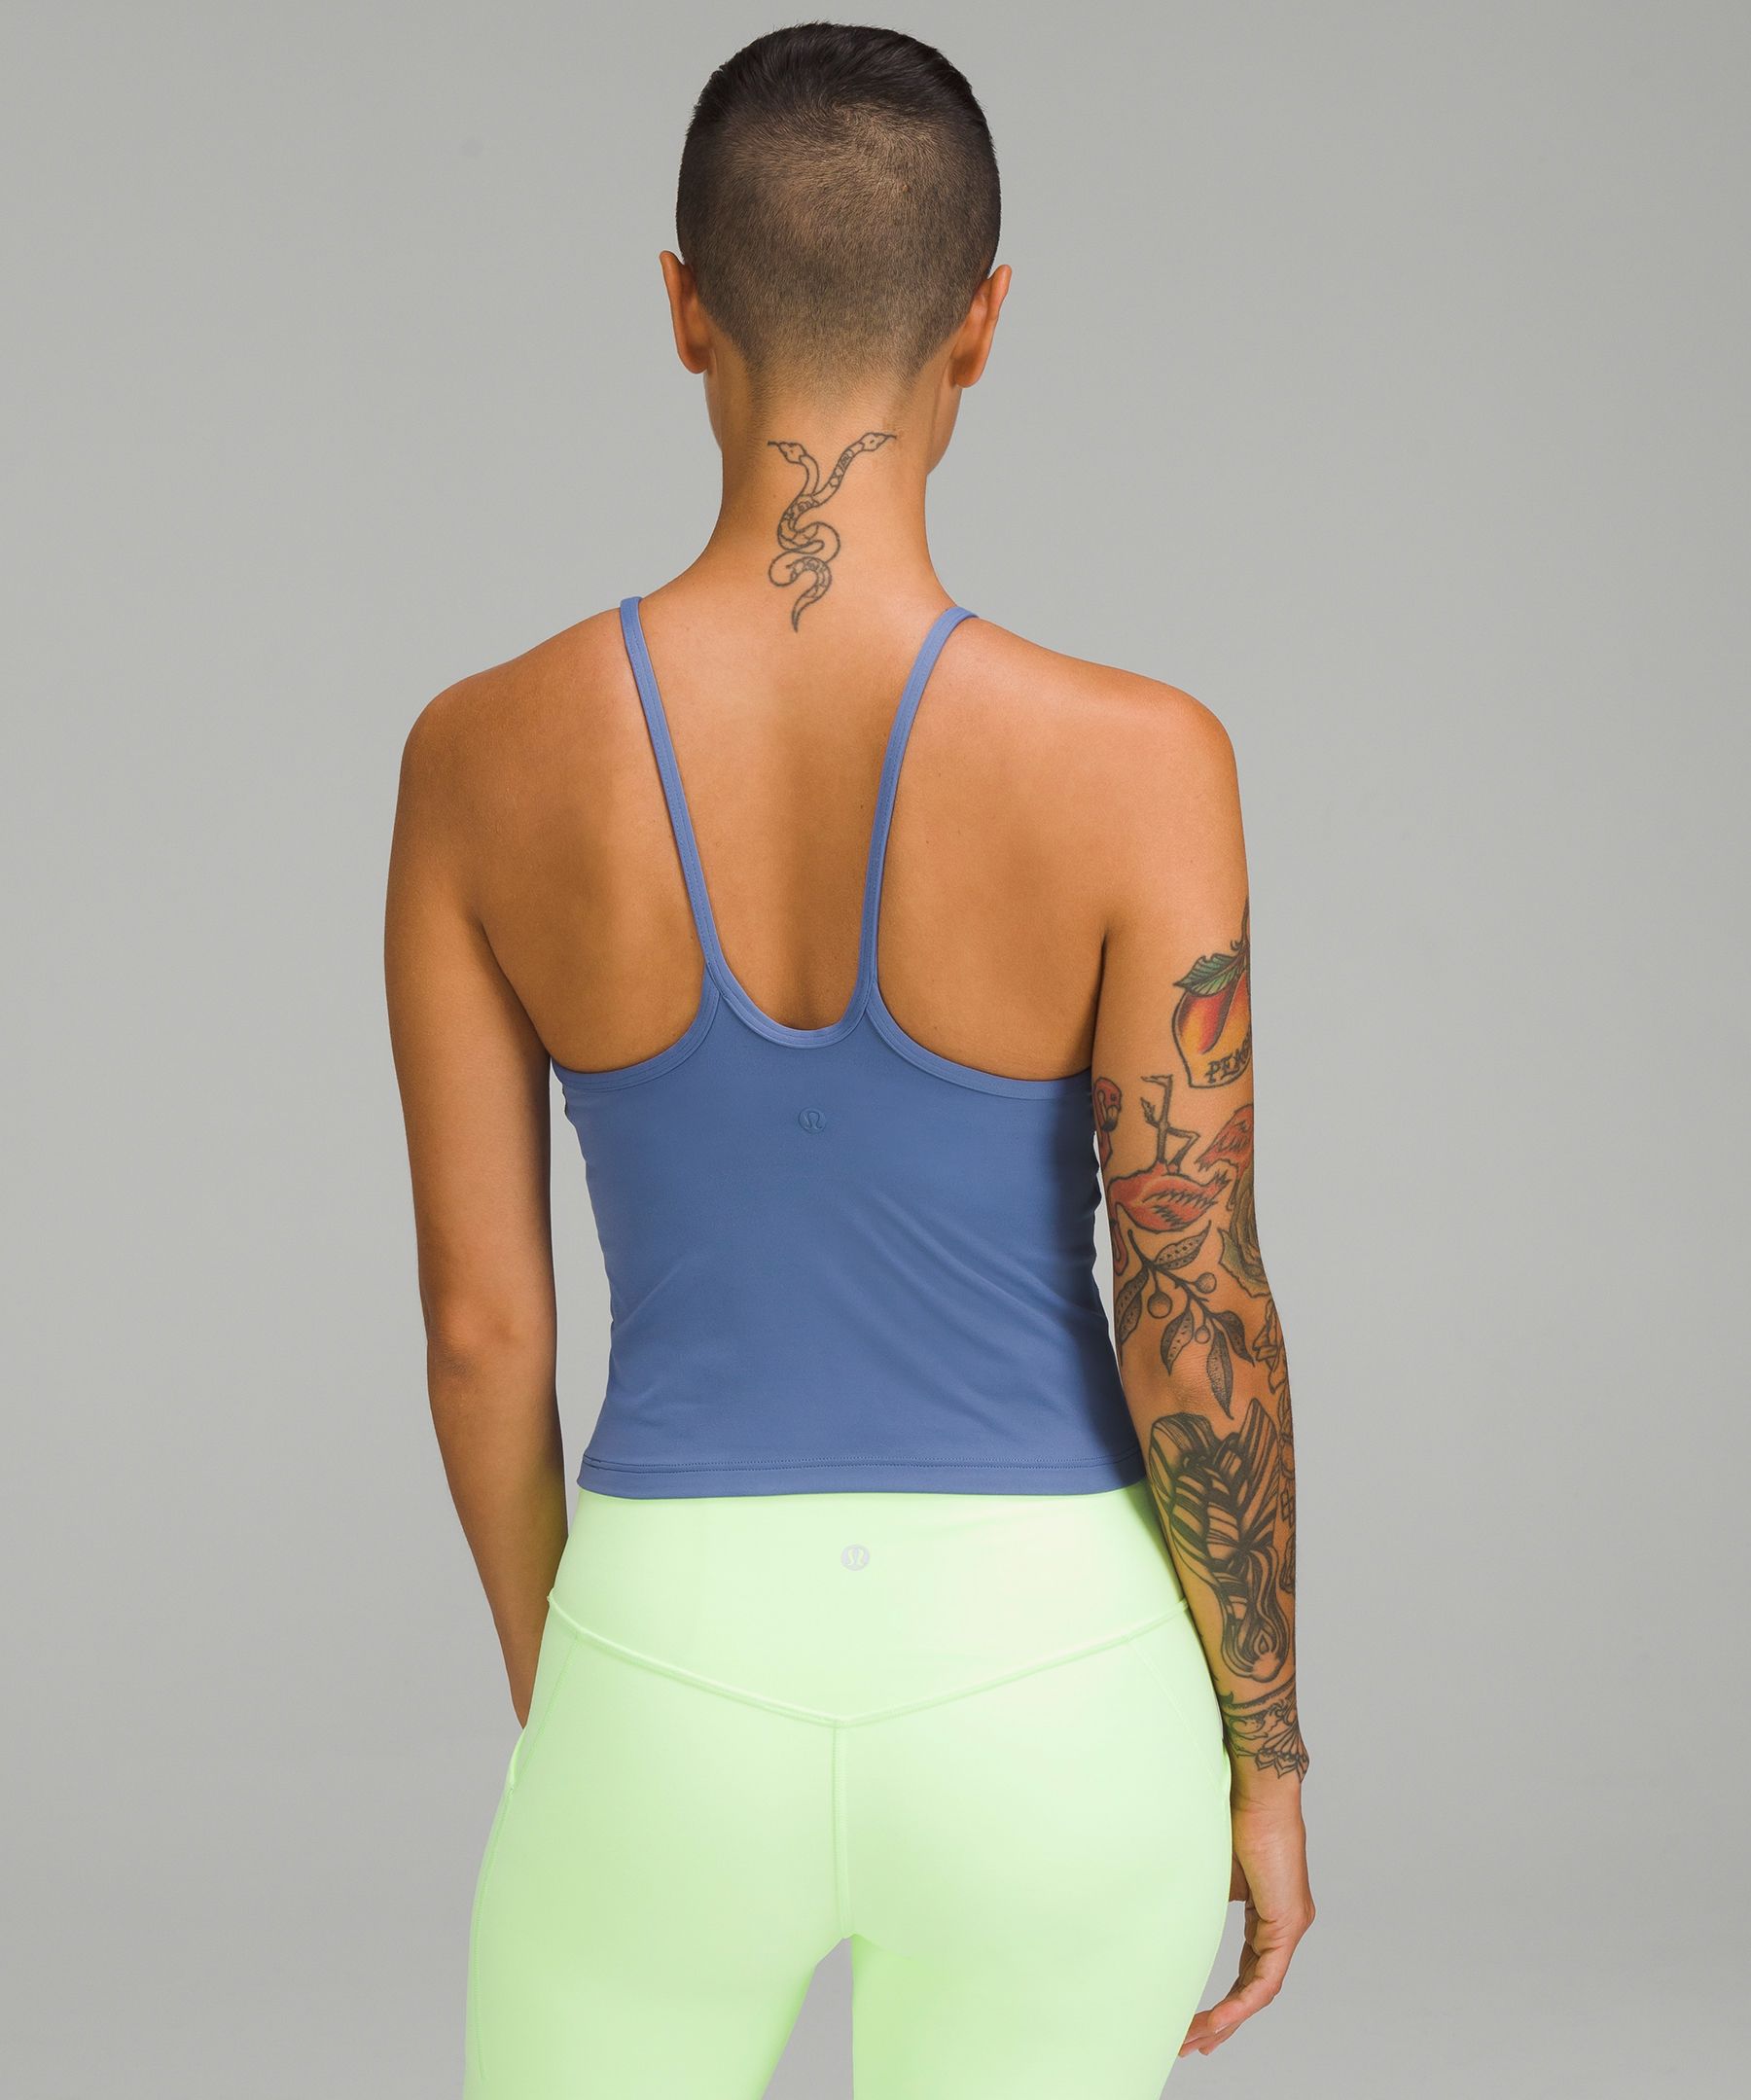 Lululemon Black InStill Tank Top Yoga Built in Bra Smoothcover Fabric